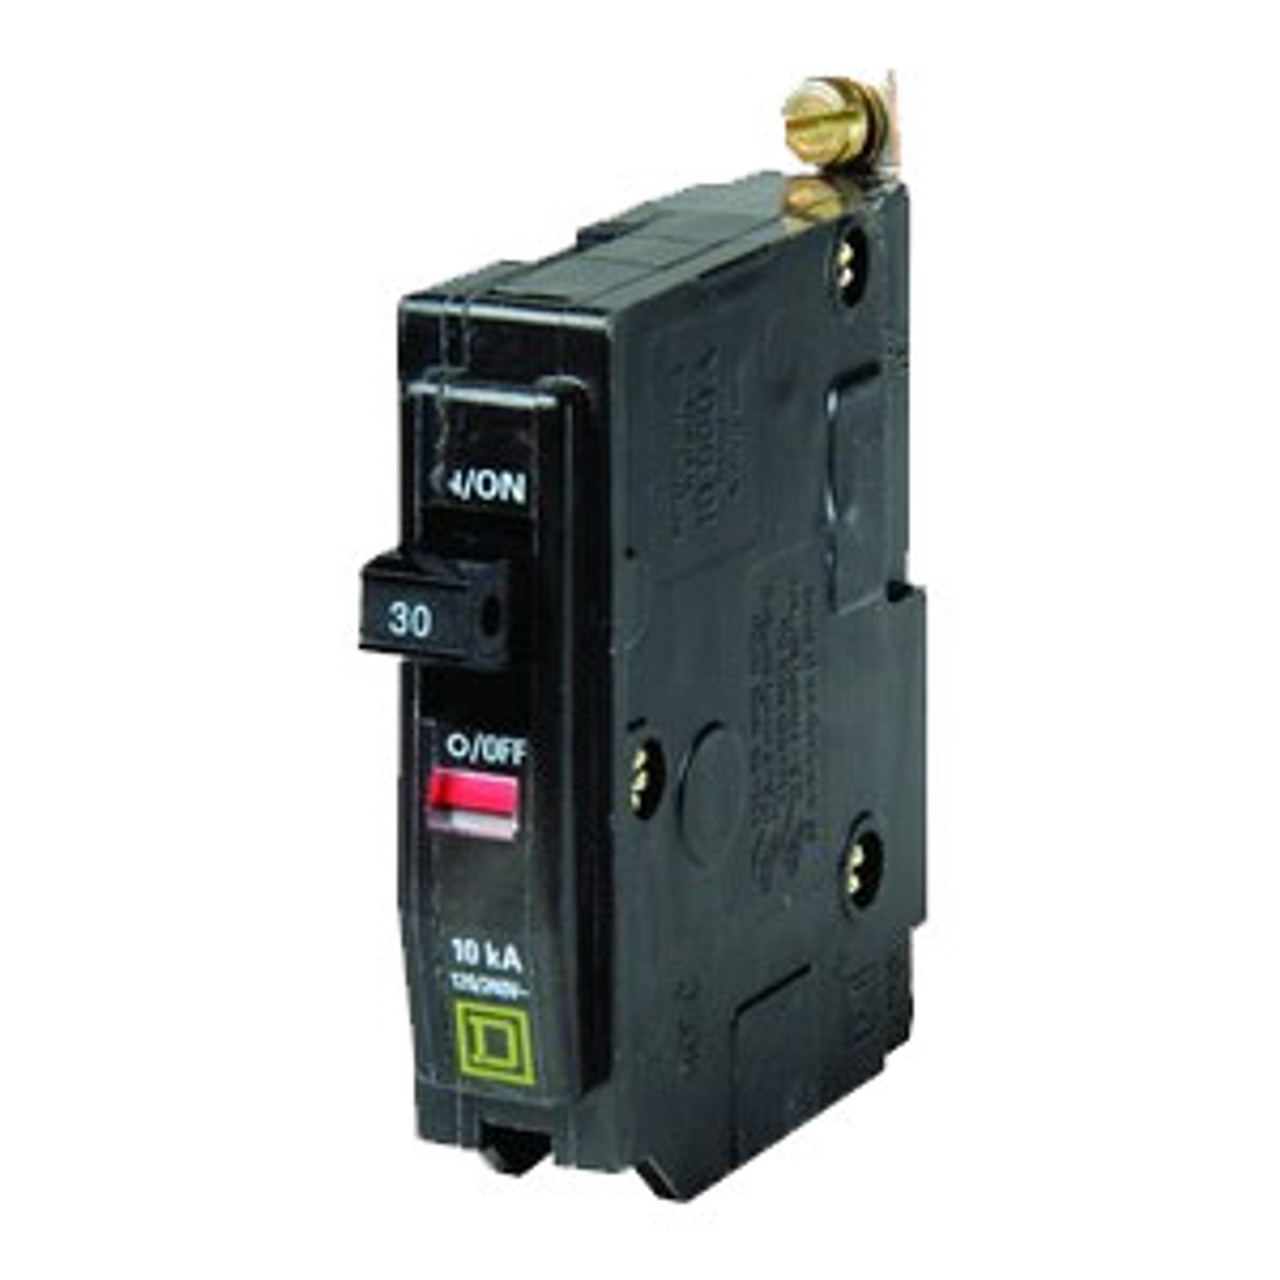 QOB130, Miniature Circuit Breaker (QOB) Standard, 30A, 1-Pole, 120/240 Vac, 1-Phase, 10kA